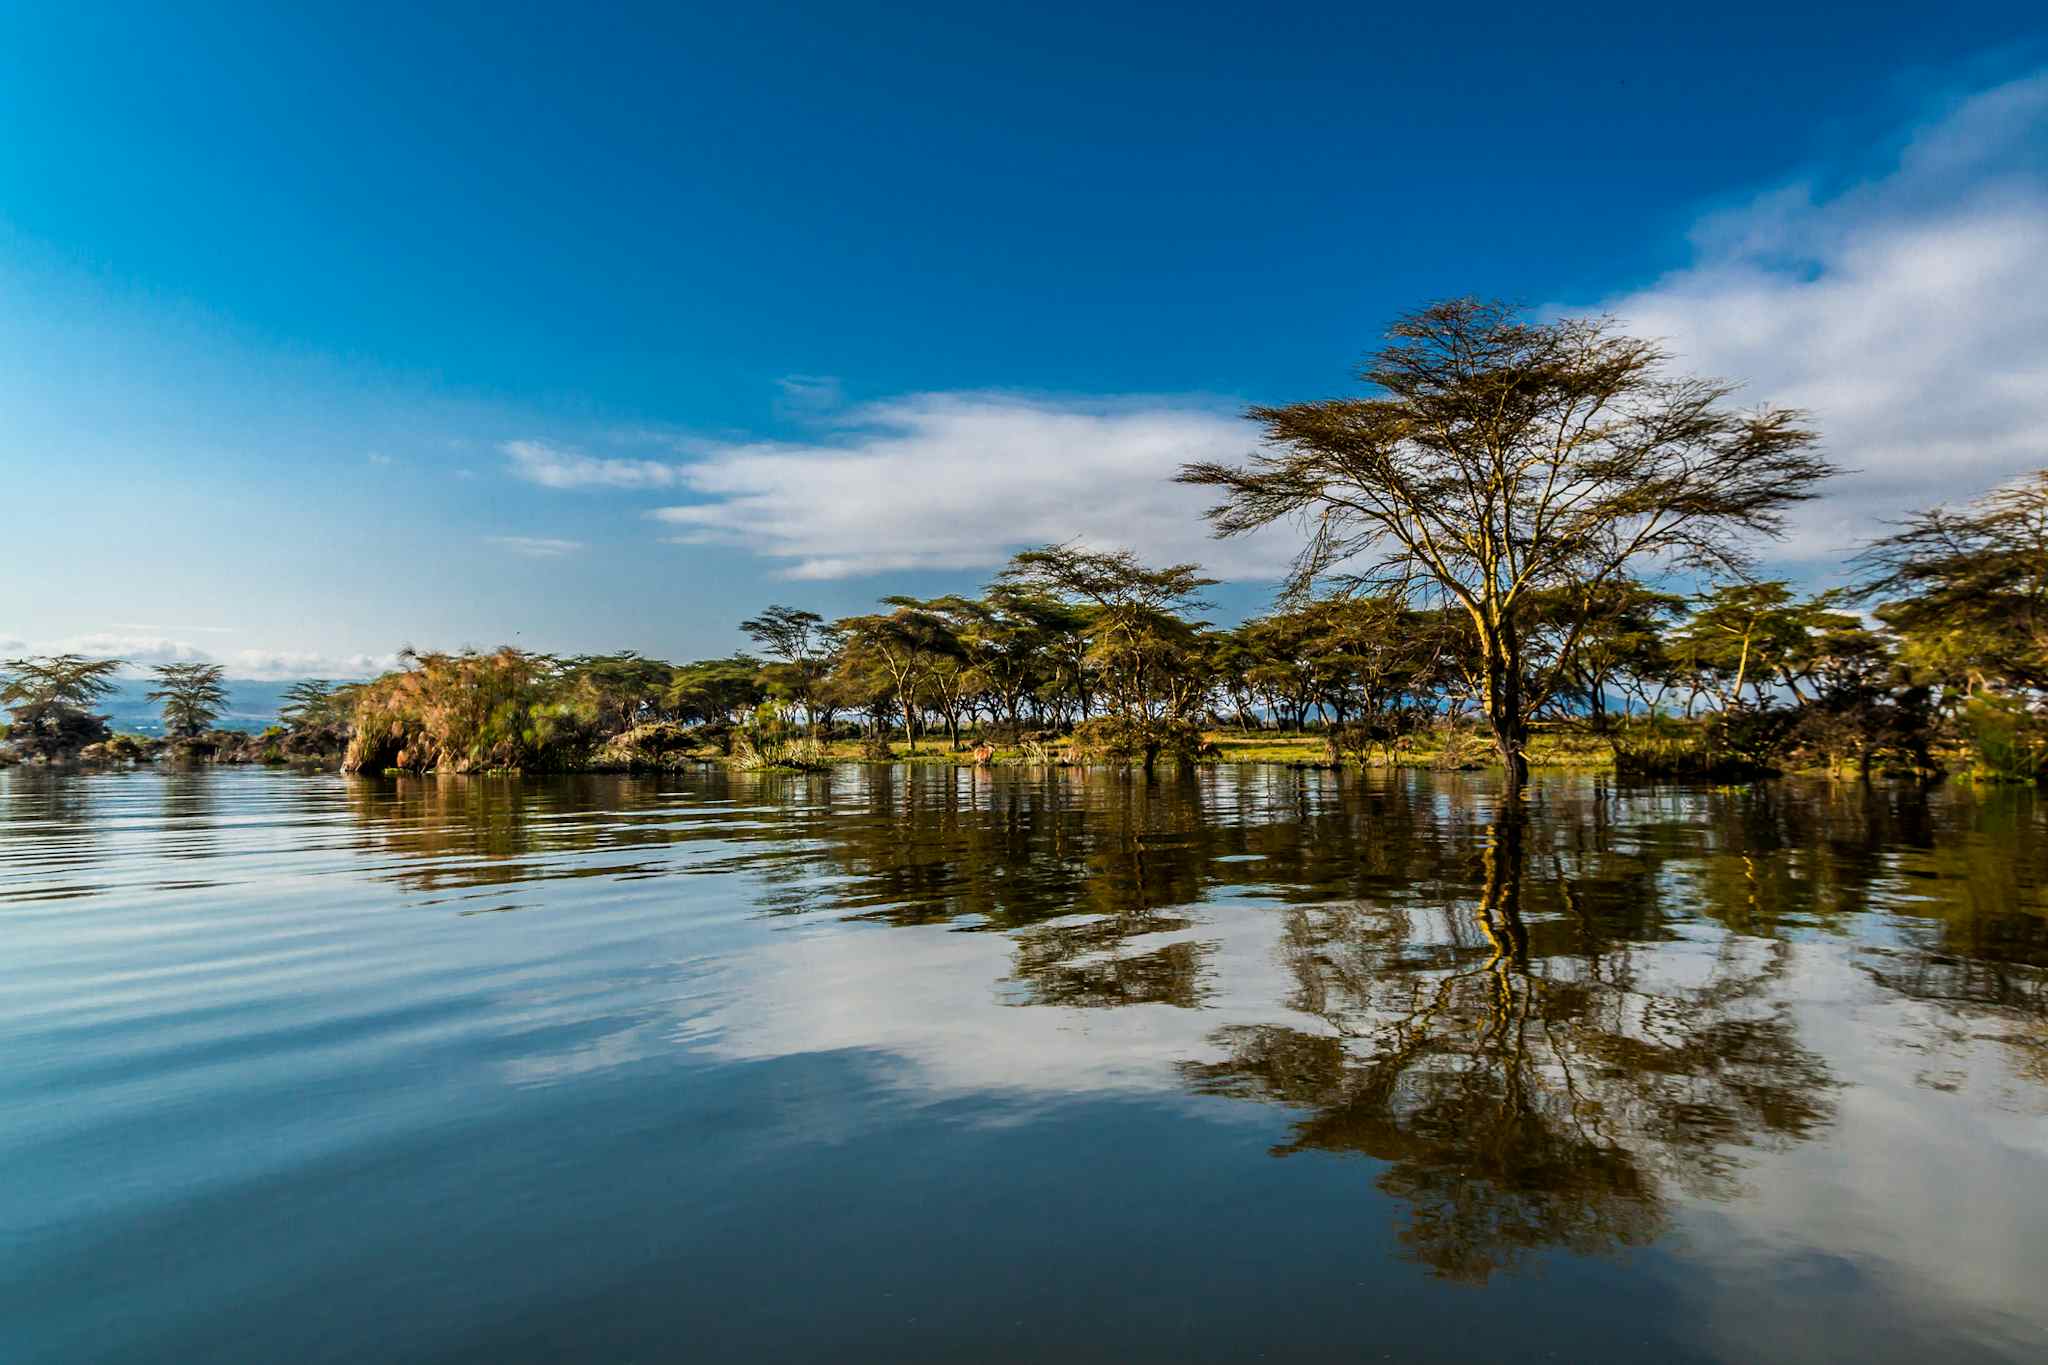 Lake Naivasha in Kenya
Getty #513954353